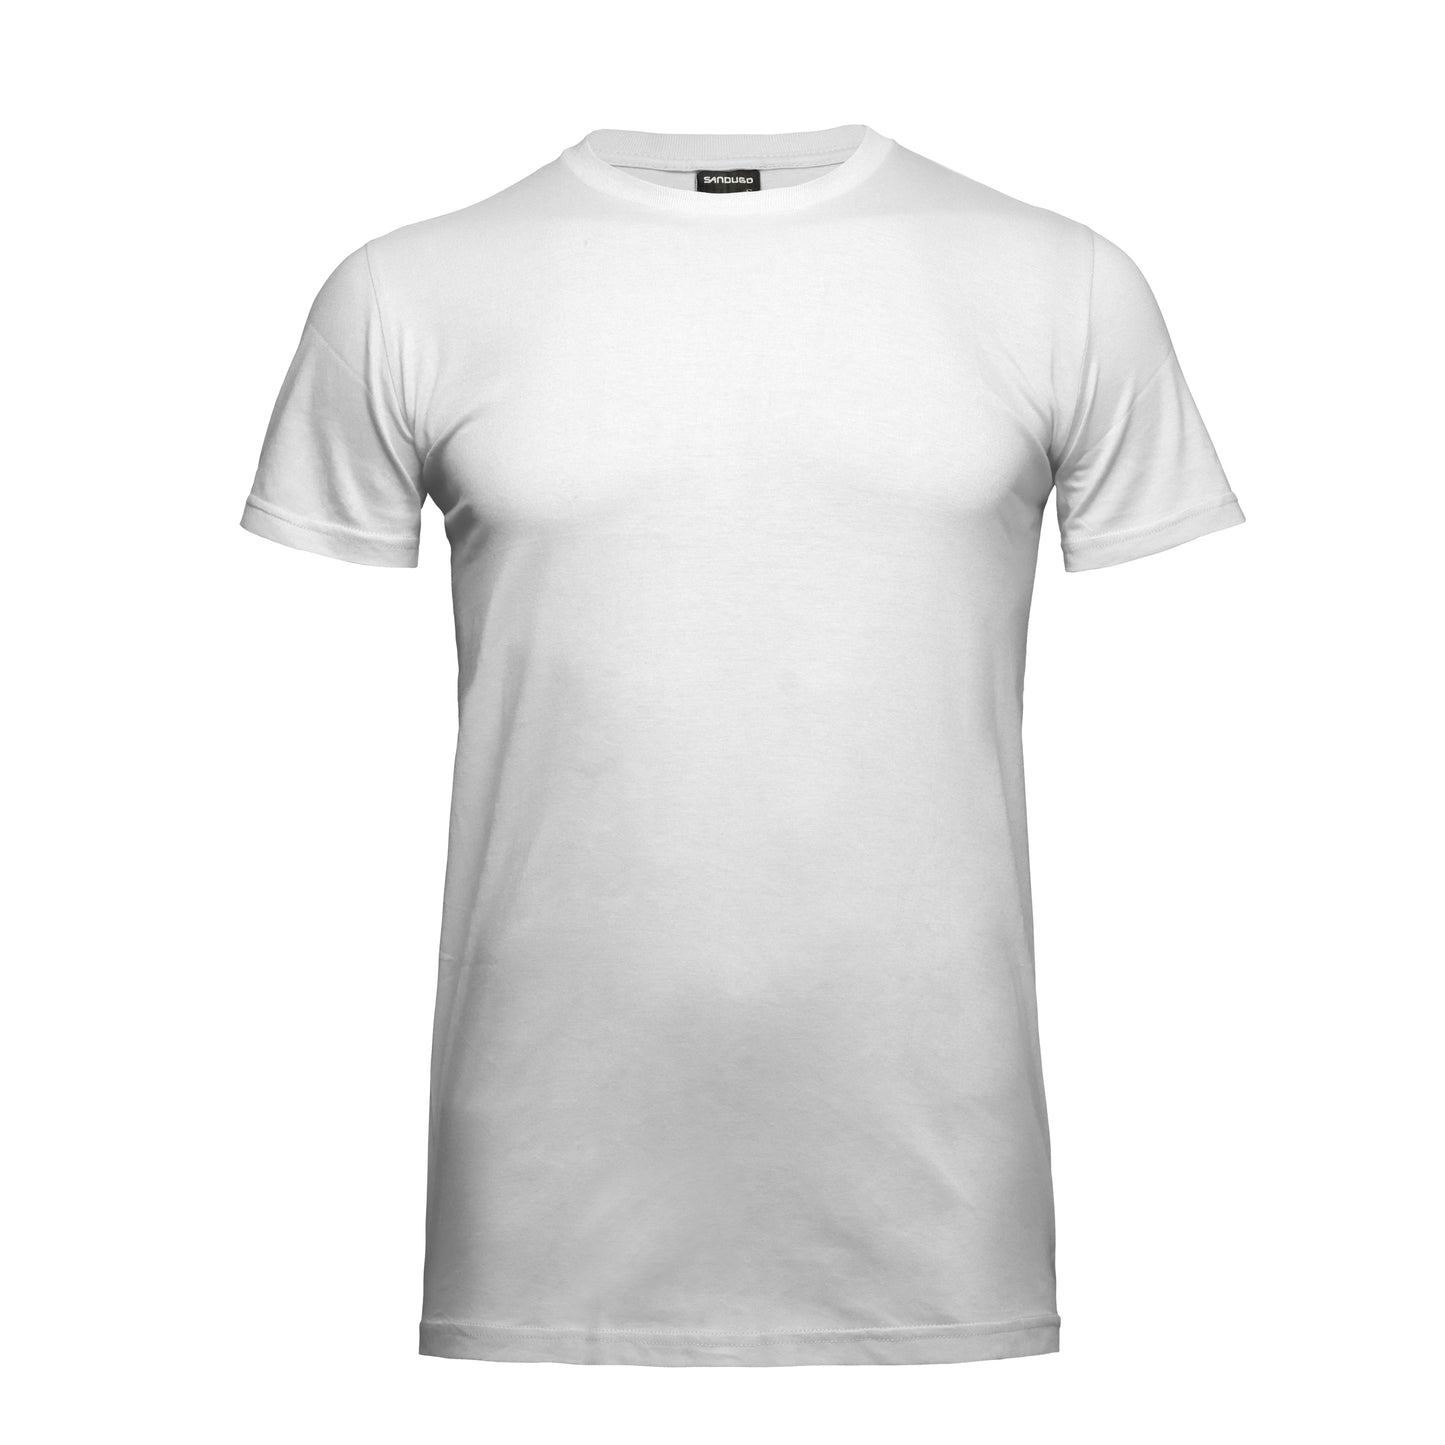 Sandugo CTSLOW Cotton T-Shirt